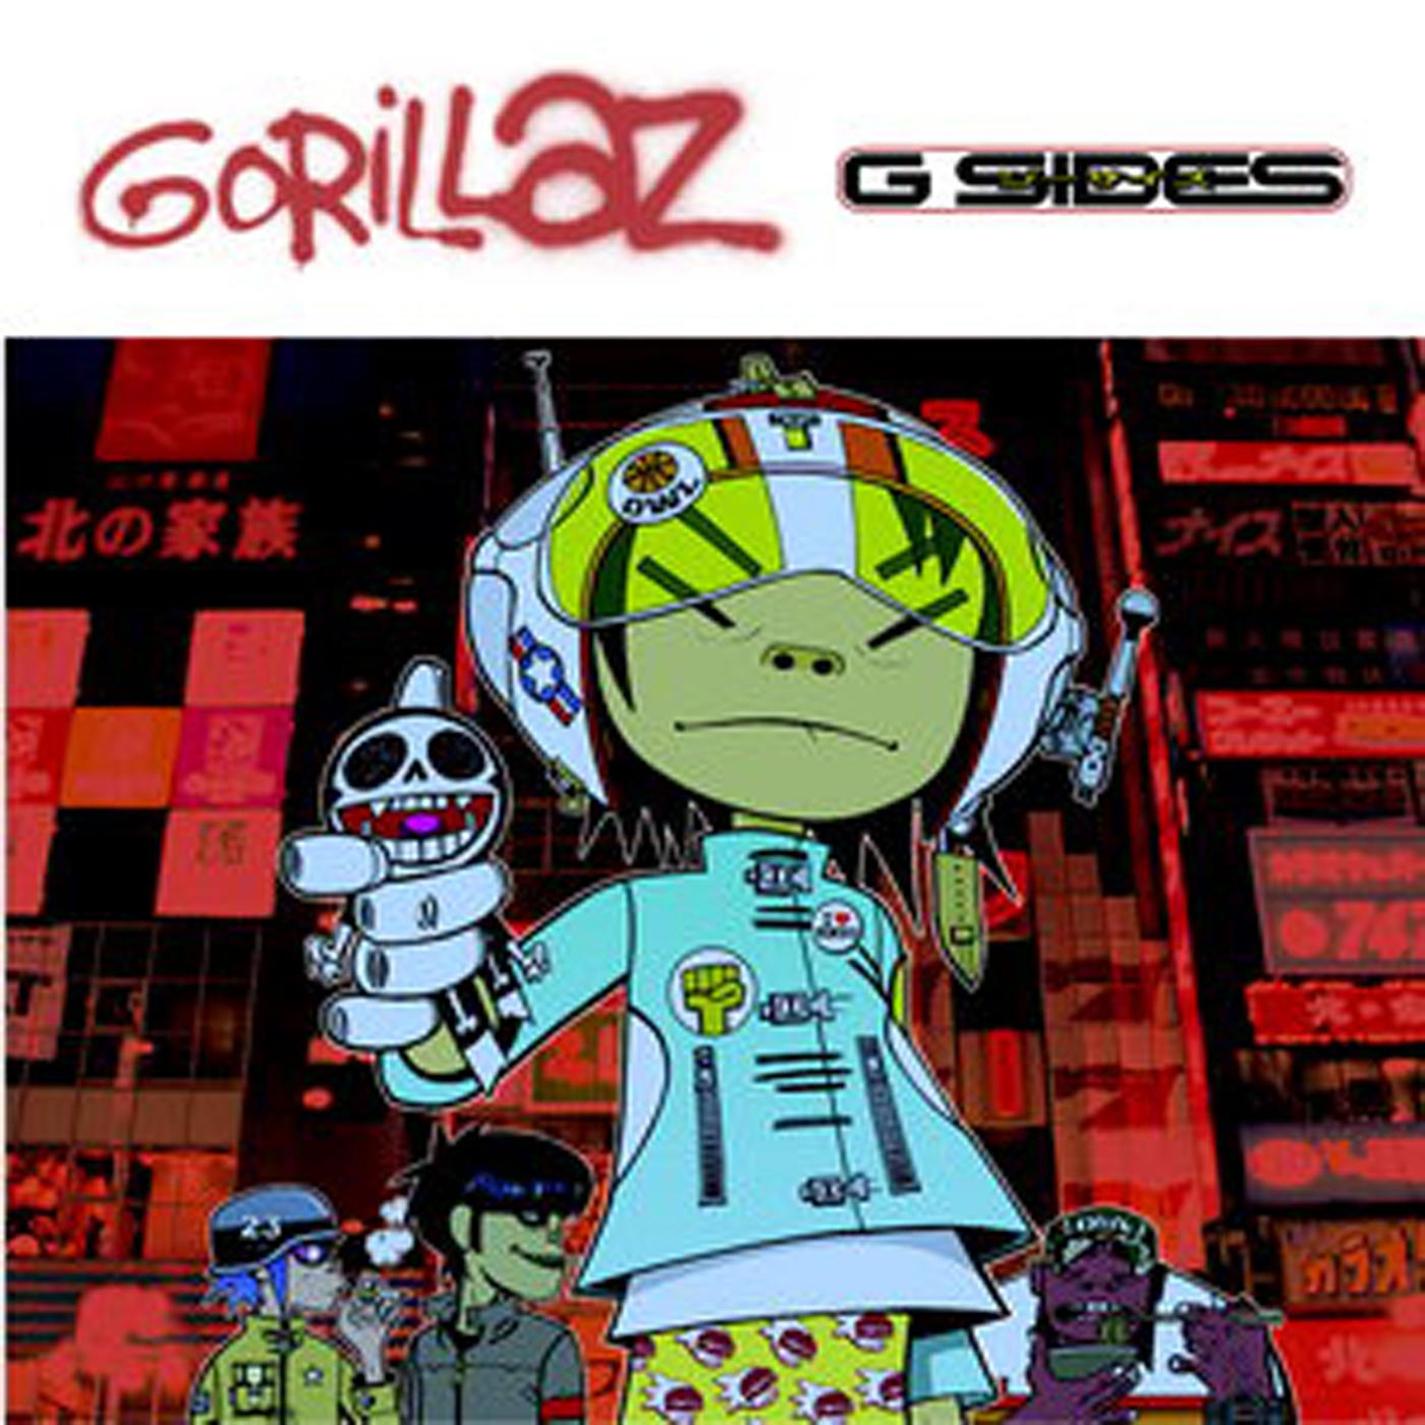 GORILLAZ - G-Sides - LP Limited Vinyl [RSD2020-AUG29]